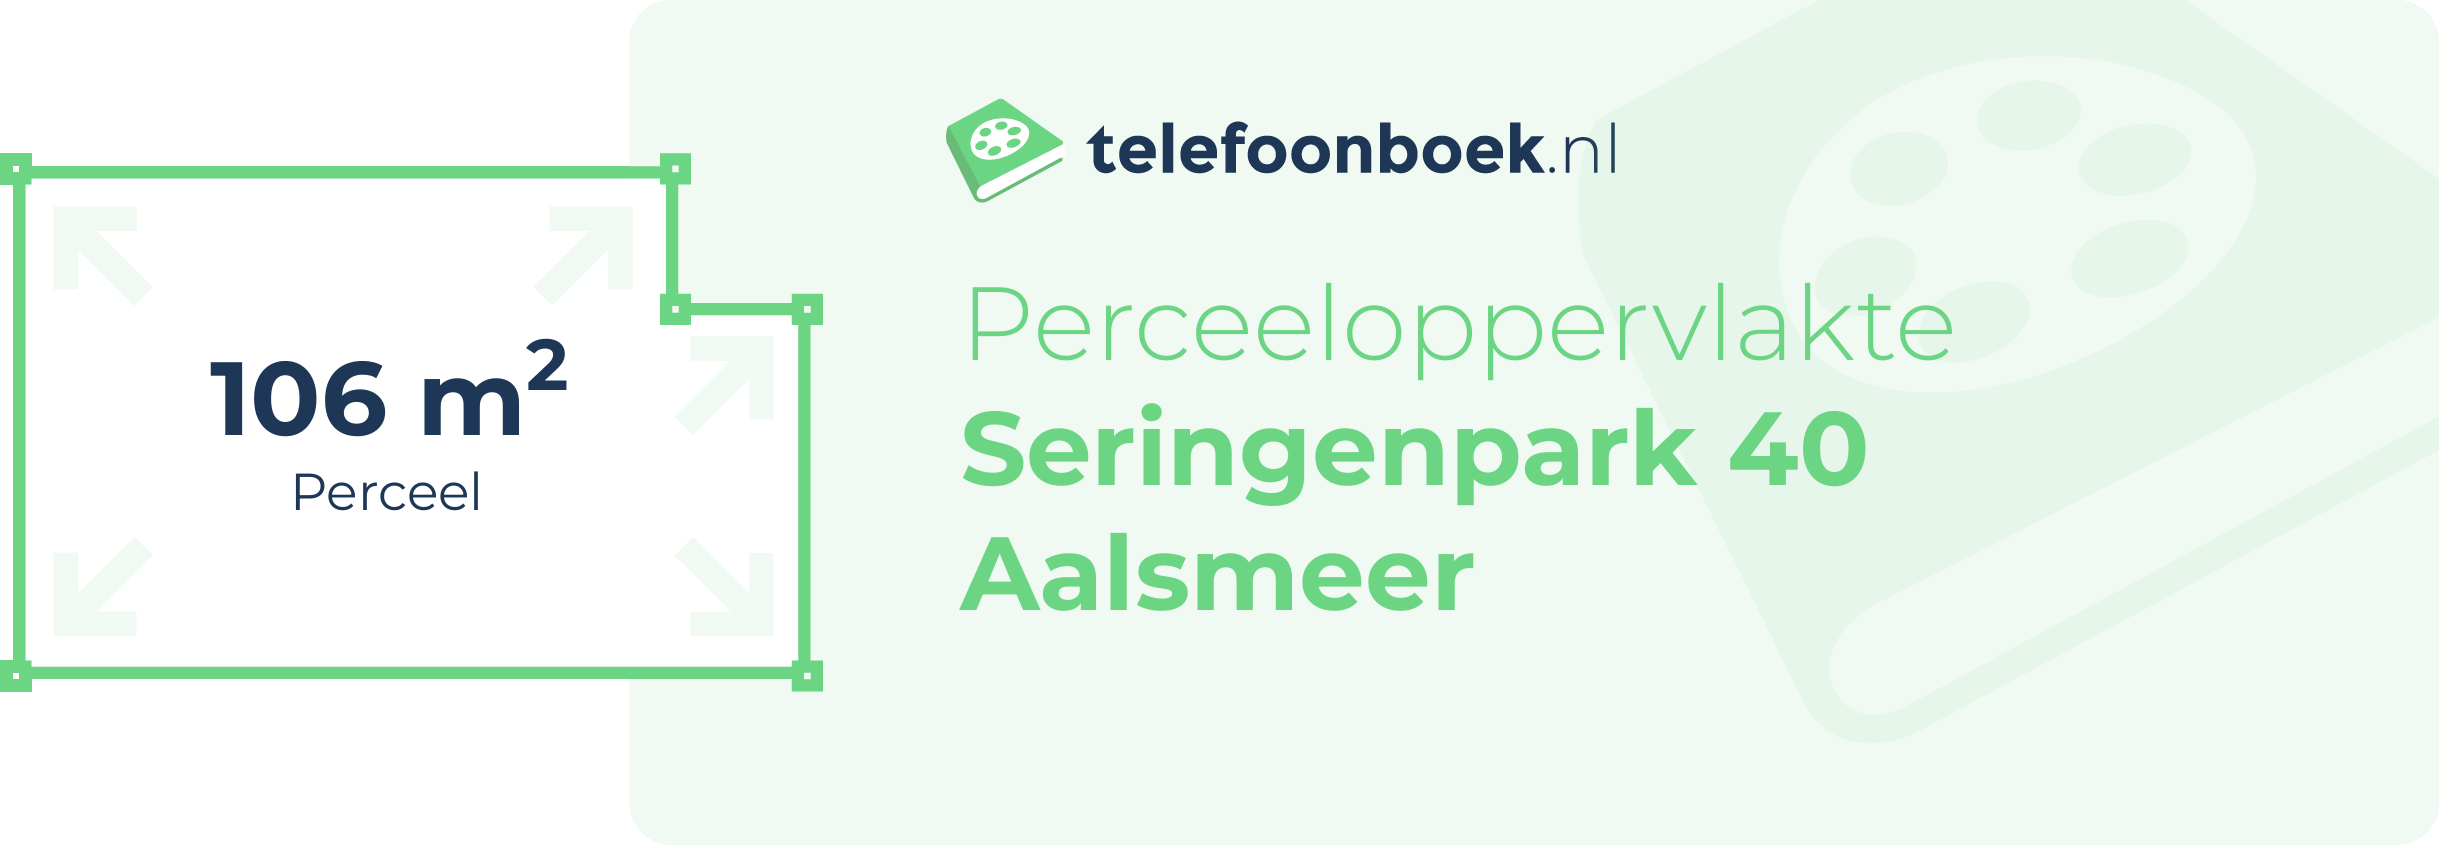 Perceeloppervlakte Seringenpark 40 Aalsmeer